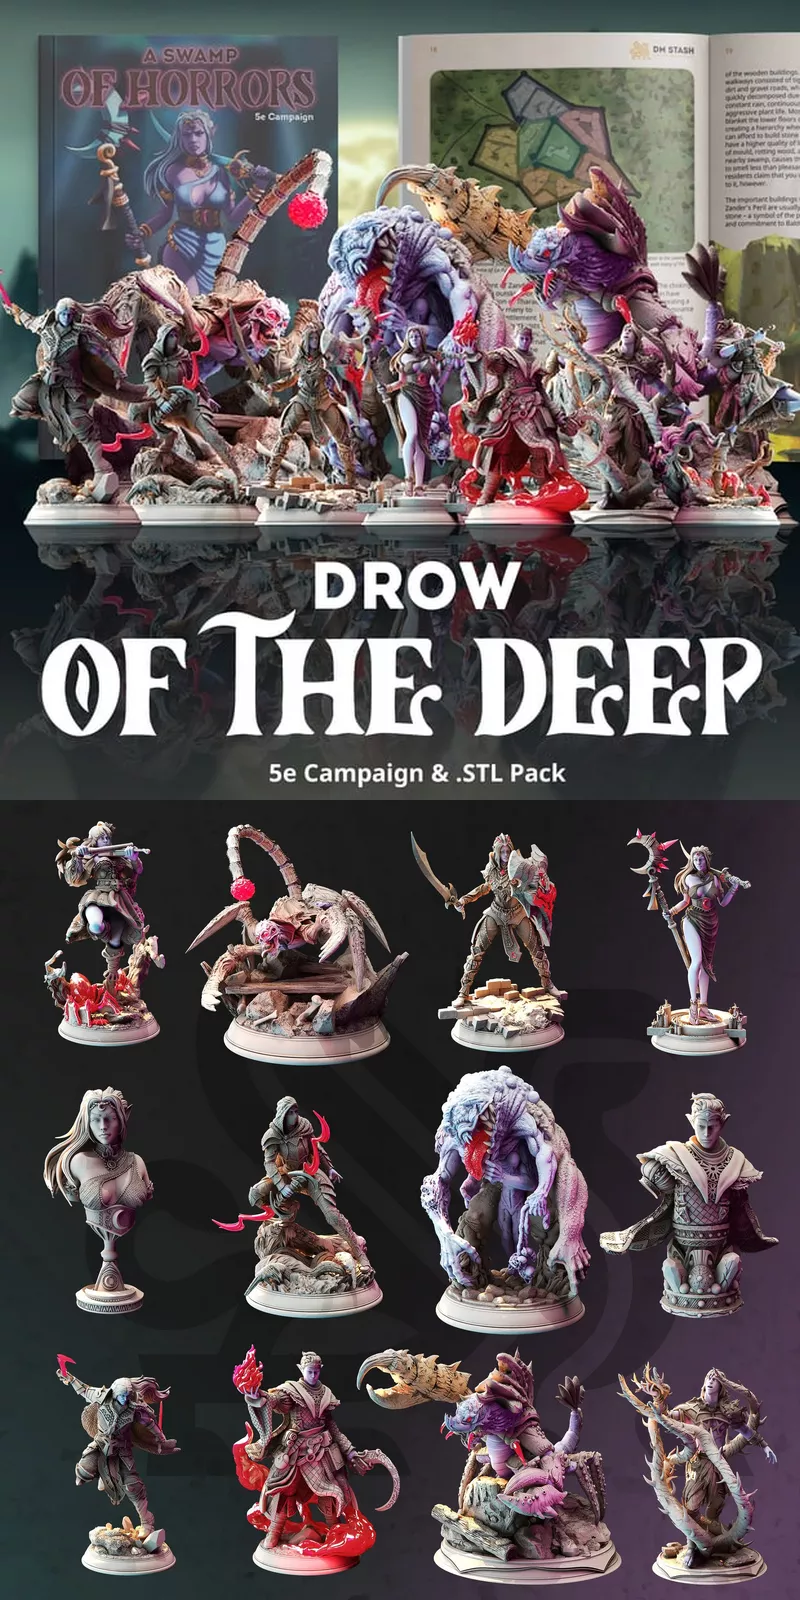 Drow of the Deep - DM Stash - 08 August 2022